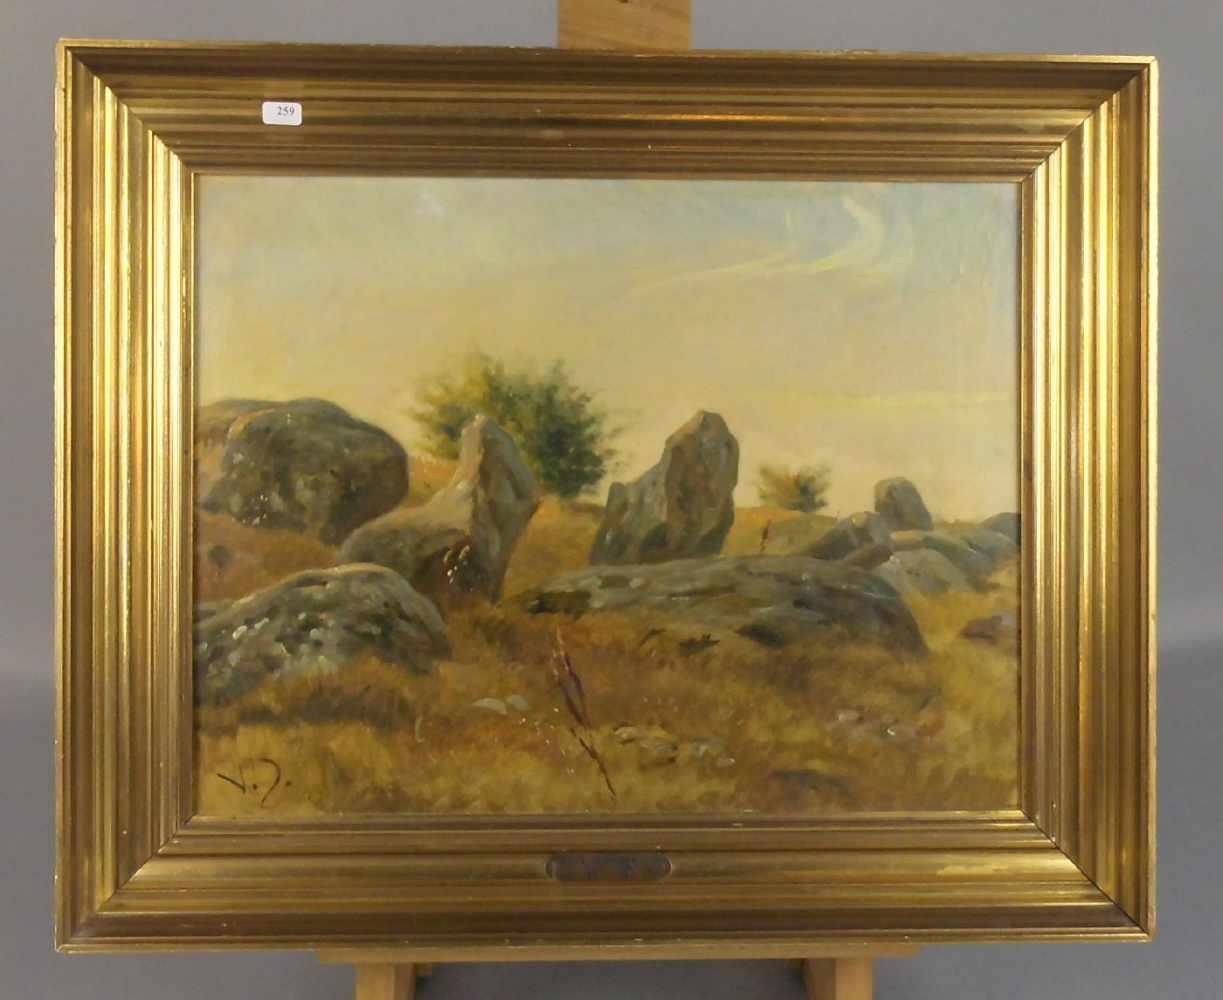 IRMINGER, VALDEMAR (1850-1938), Gemälde / painting: "Hünensteine", Öl auf Leinwand / oil on